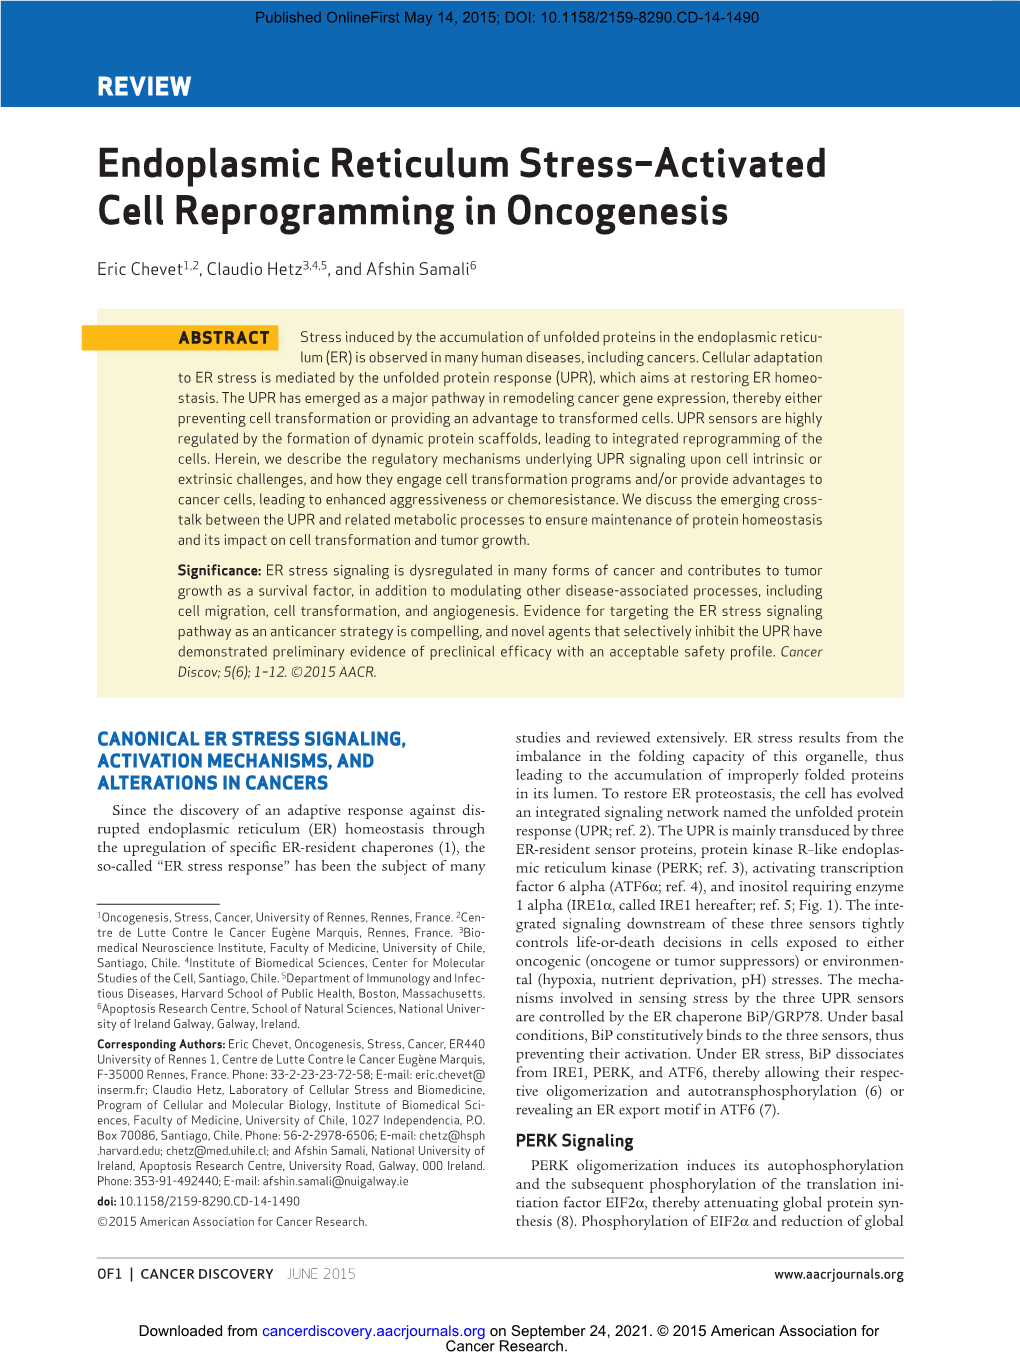 Endoplasmic Reticulum Stress–Activated Cell Reprogramming in Oncogenesis